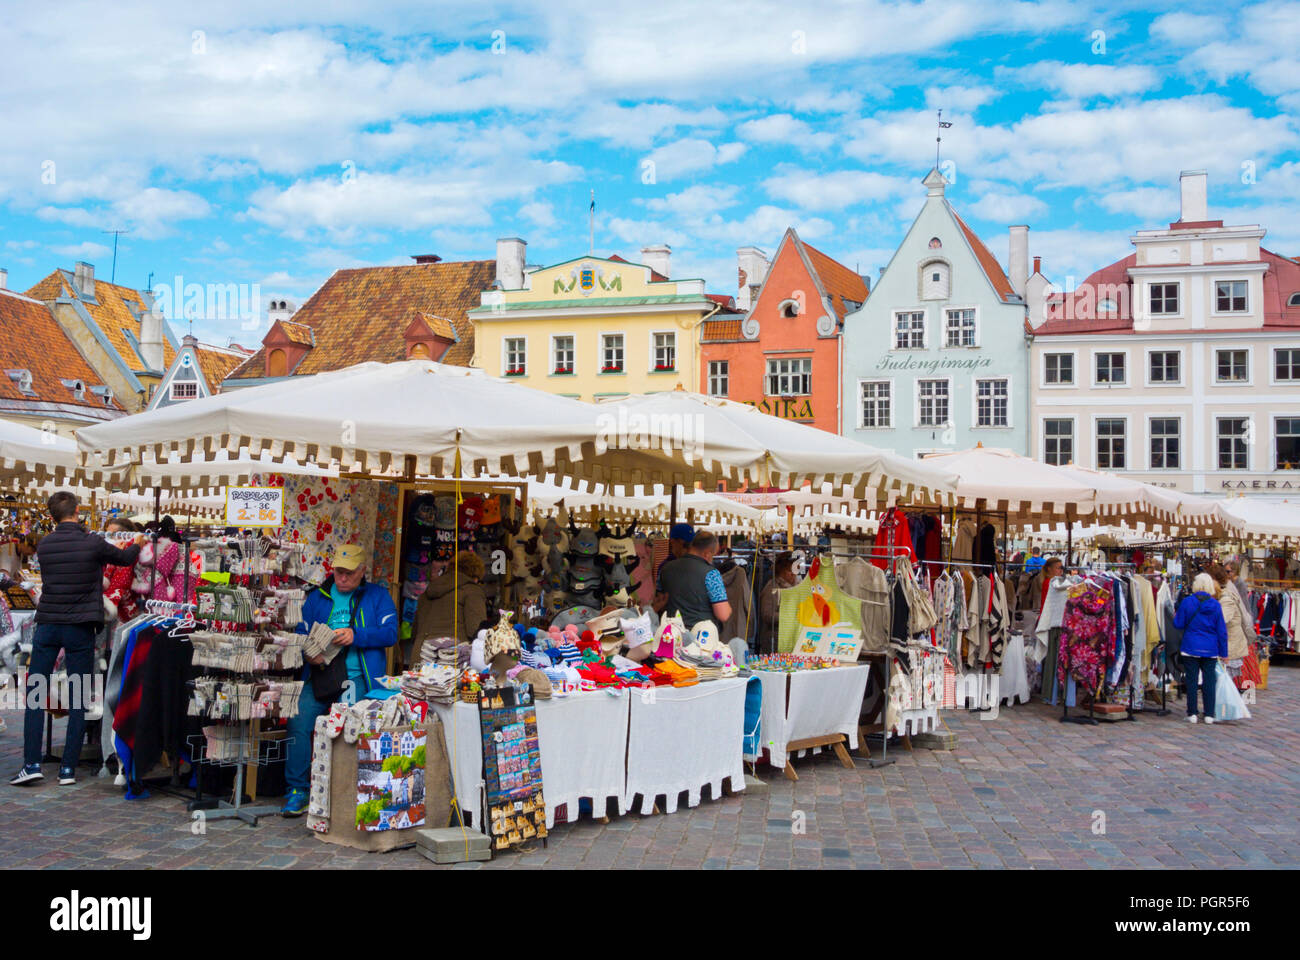 Market stalls, during Medieval days event, Raekoja plats, town hall square, old town, Tallinn, Estonia Stock Photo